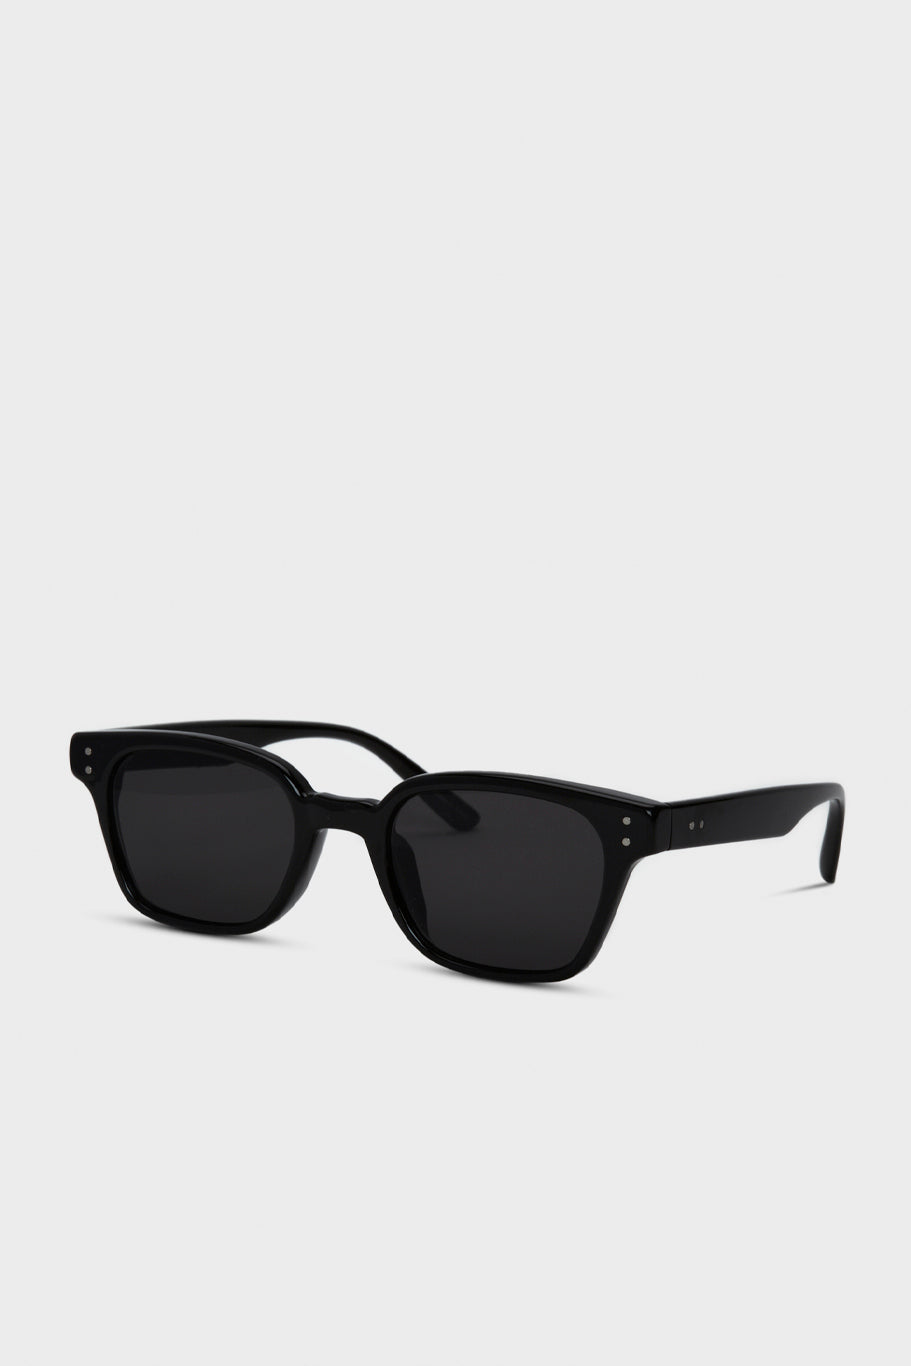 Black shaped frame black lens sunglasses_3